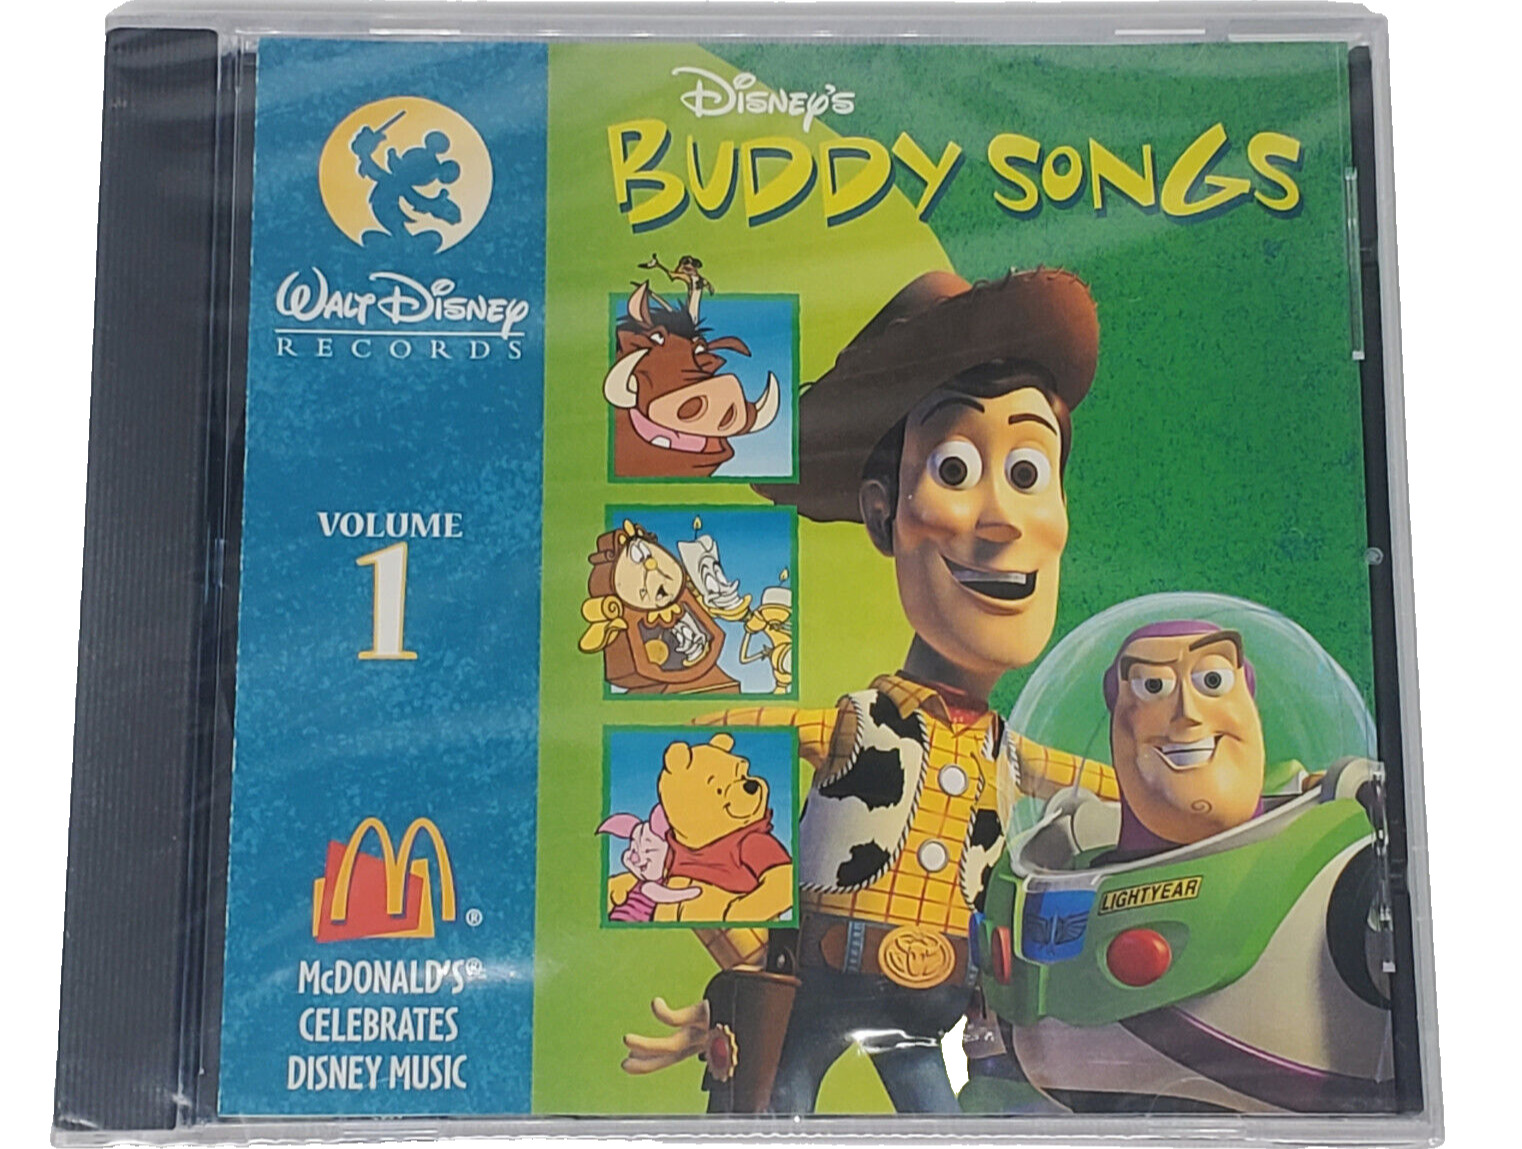 Disney's Buddy Songs Volume 1 CD 1996 New Sealed McDonald's Circuit City Borders